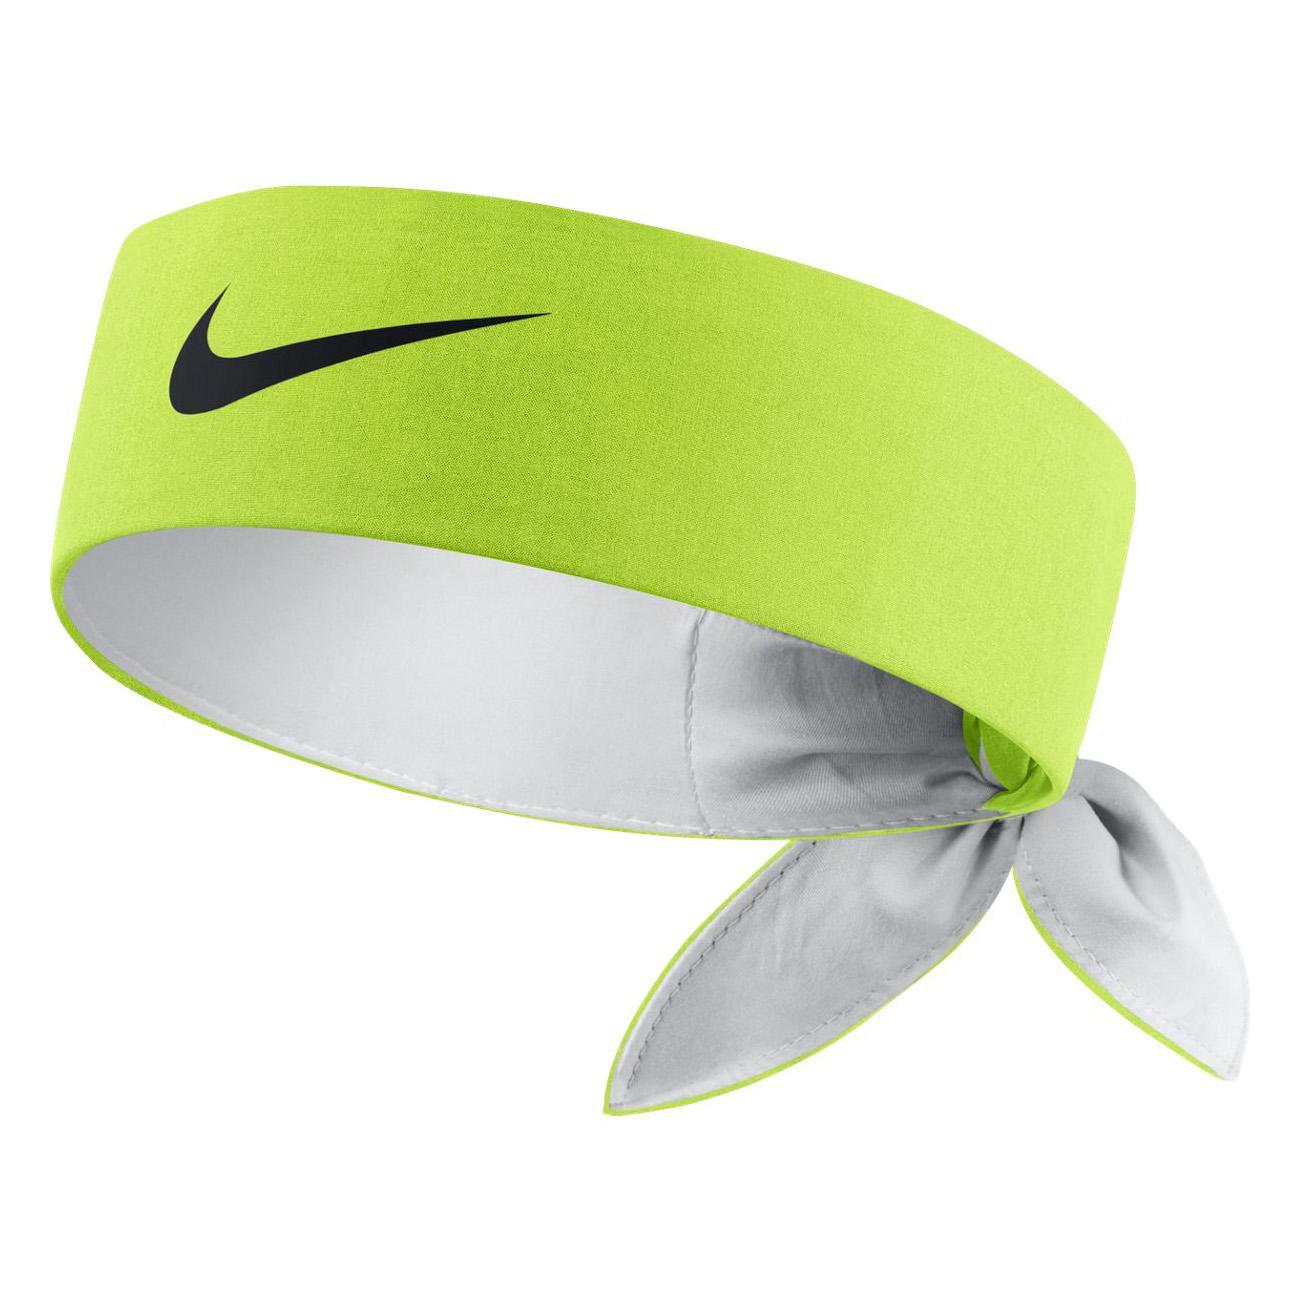 Nike Tennis Headband - Volt - Tennisnuts.com